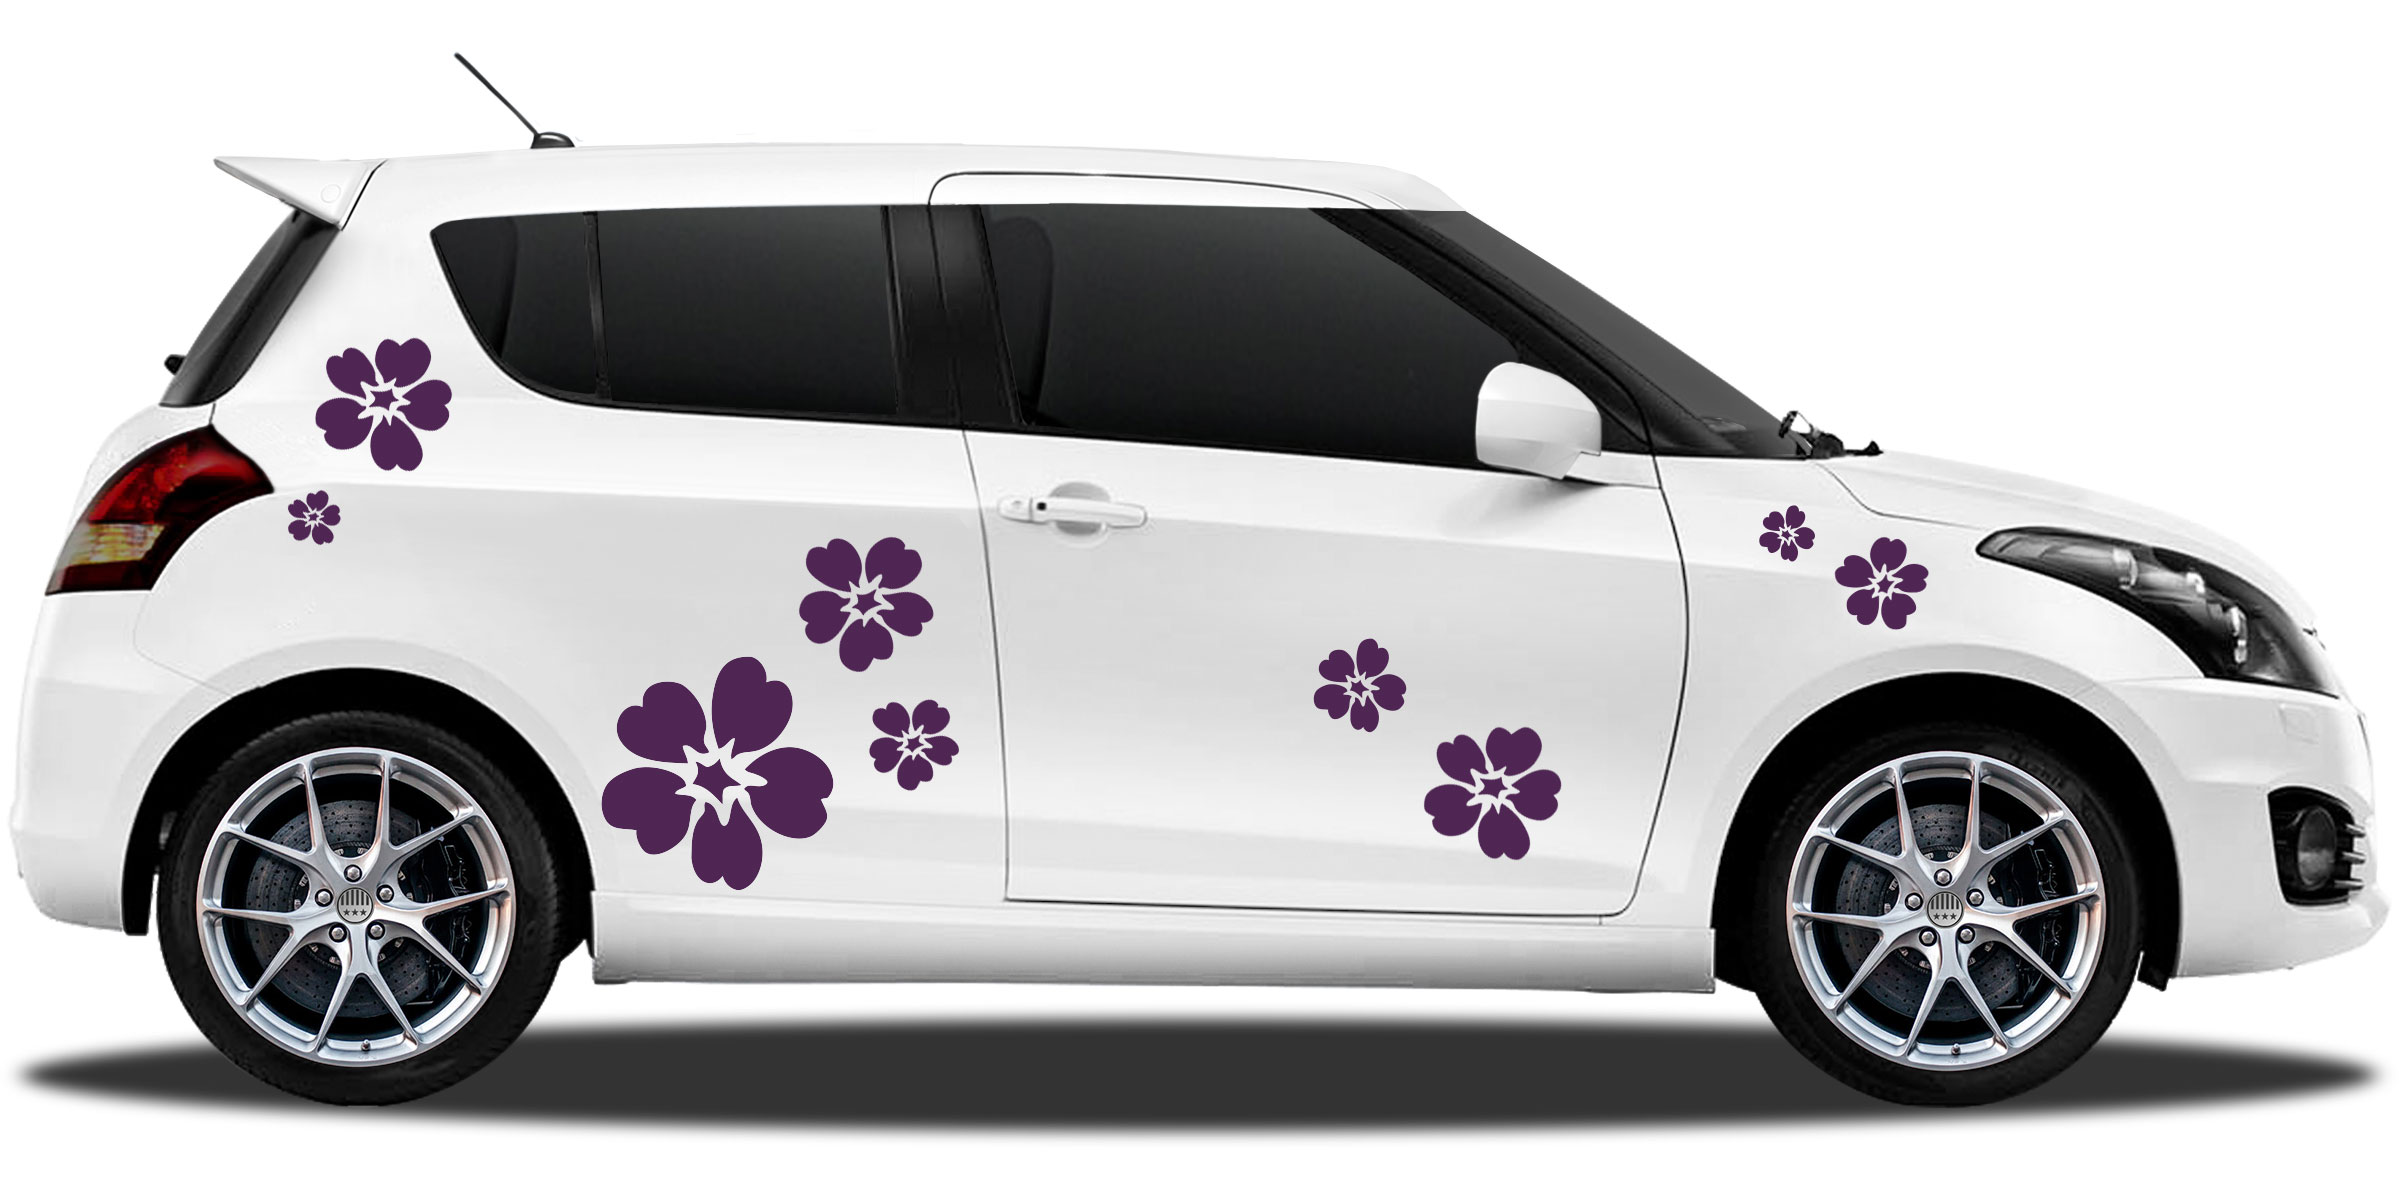 Autoaufkleber: Individuelle Blumenaufkleber fürs Auto